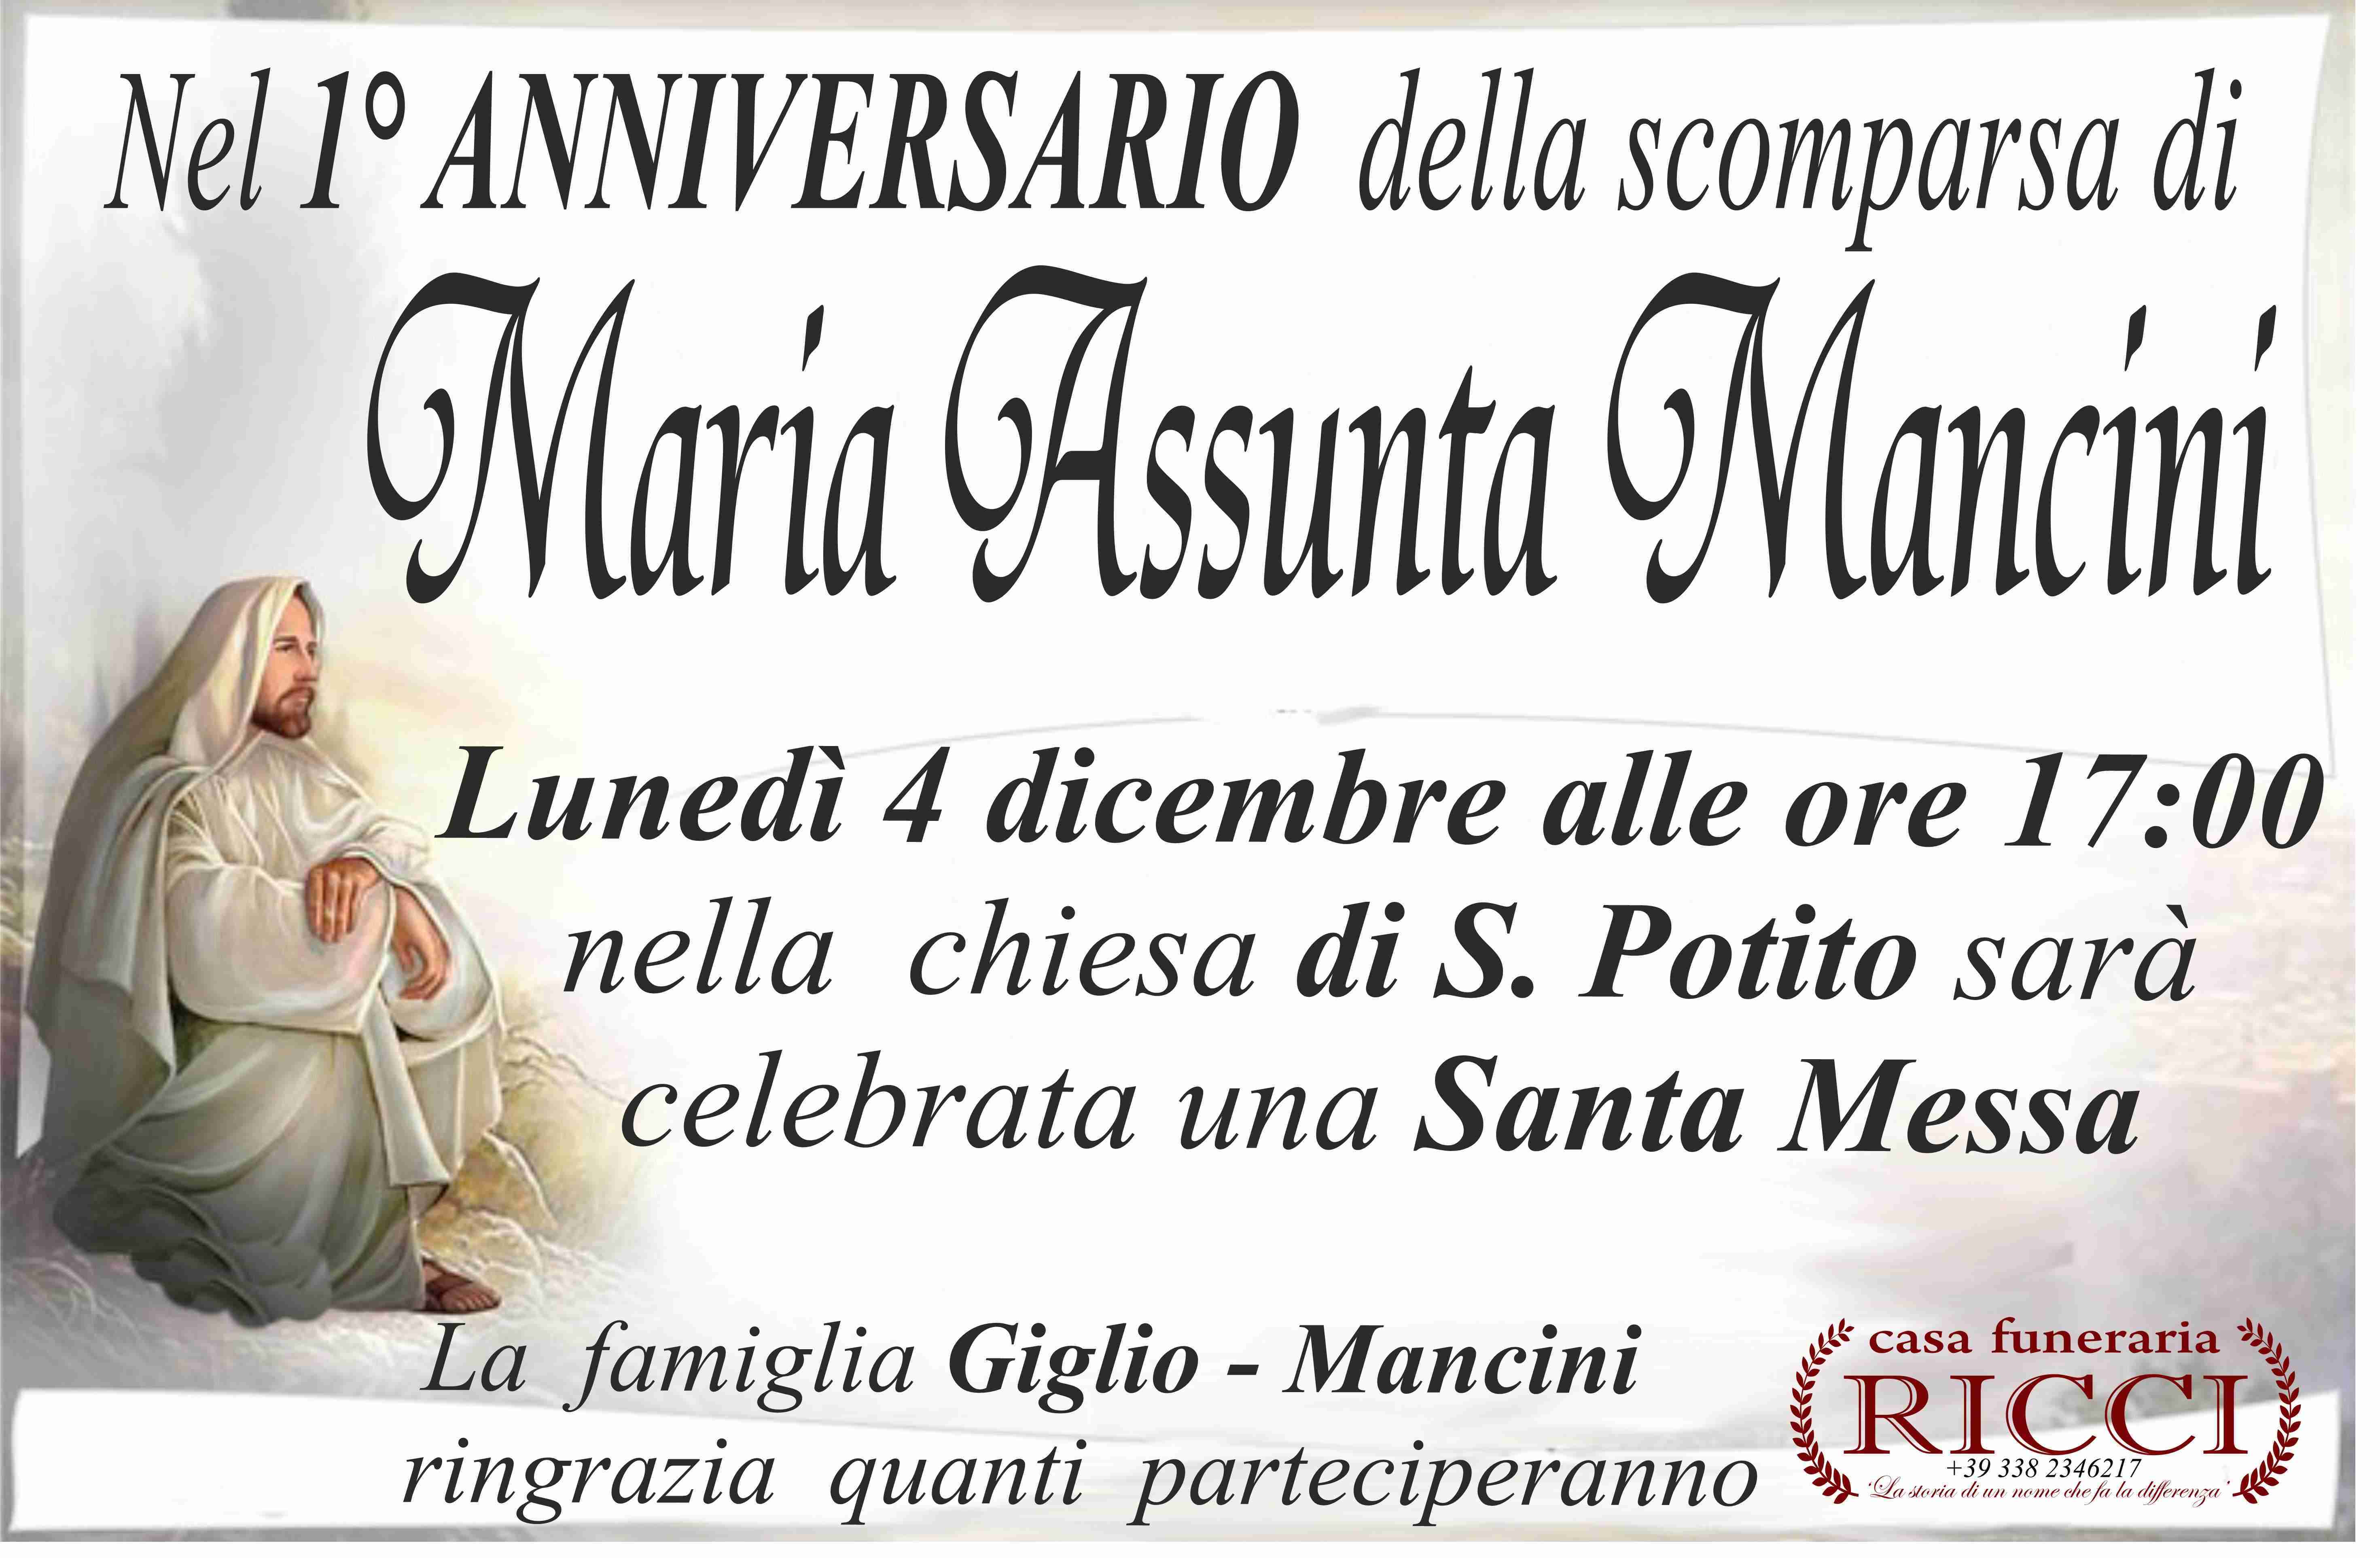 Maria Assunta Mancini